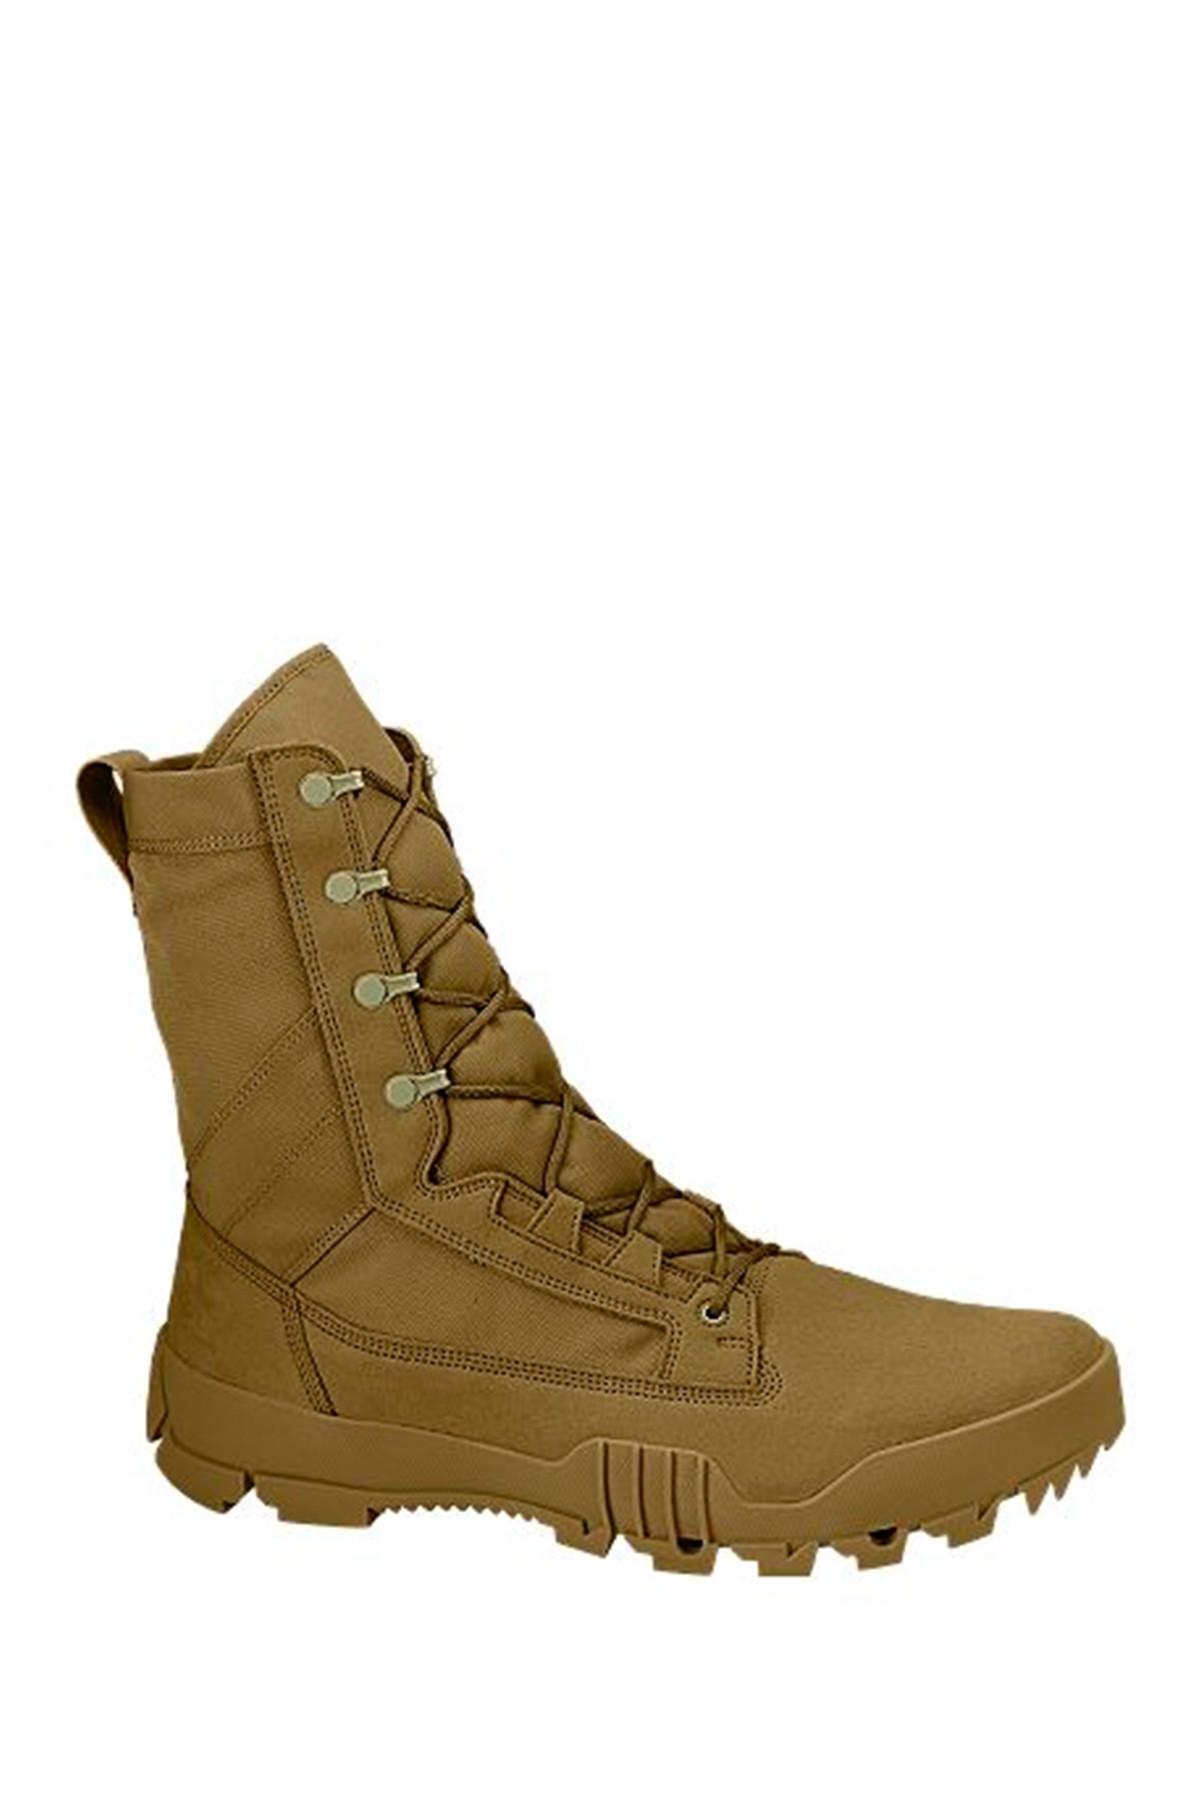 nike sfb jungle 8 inch leather boots